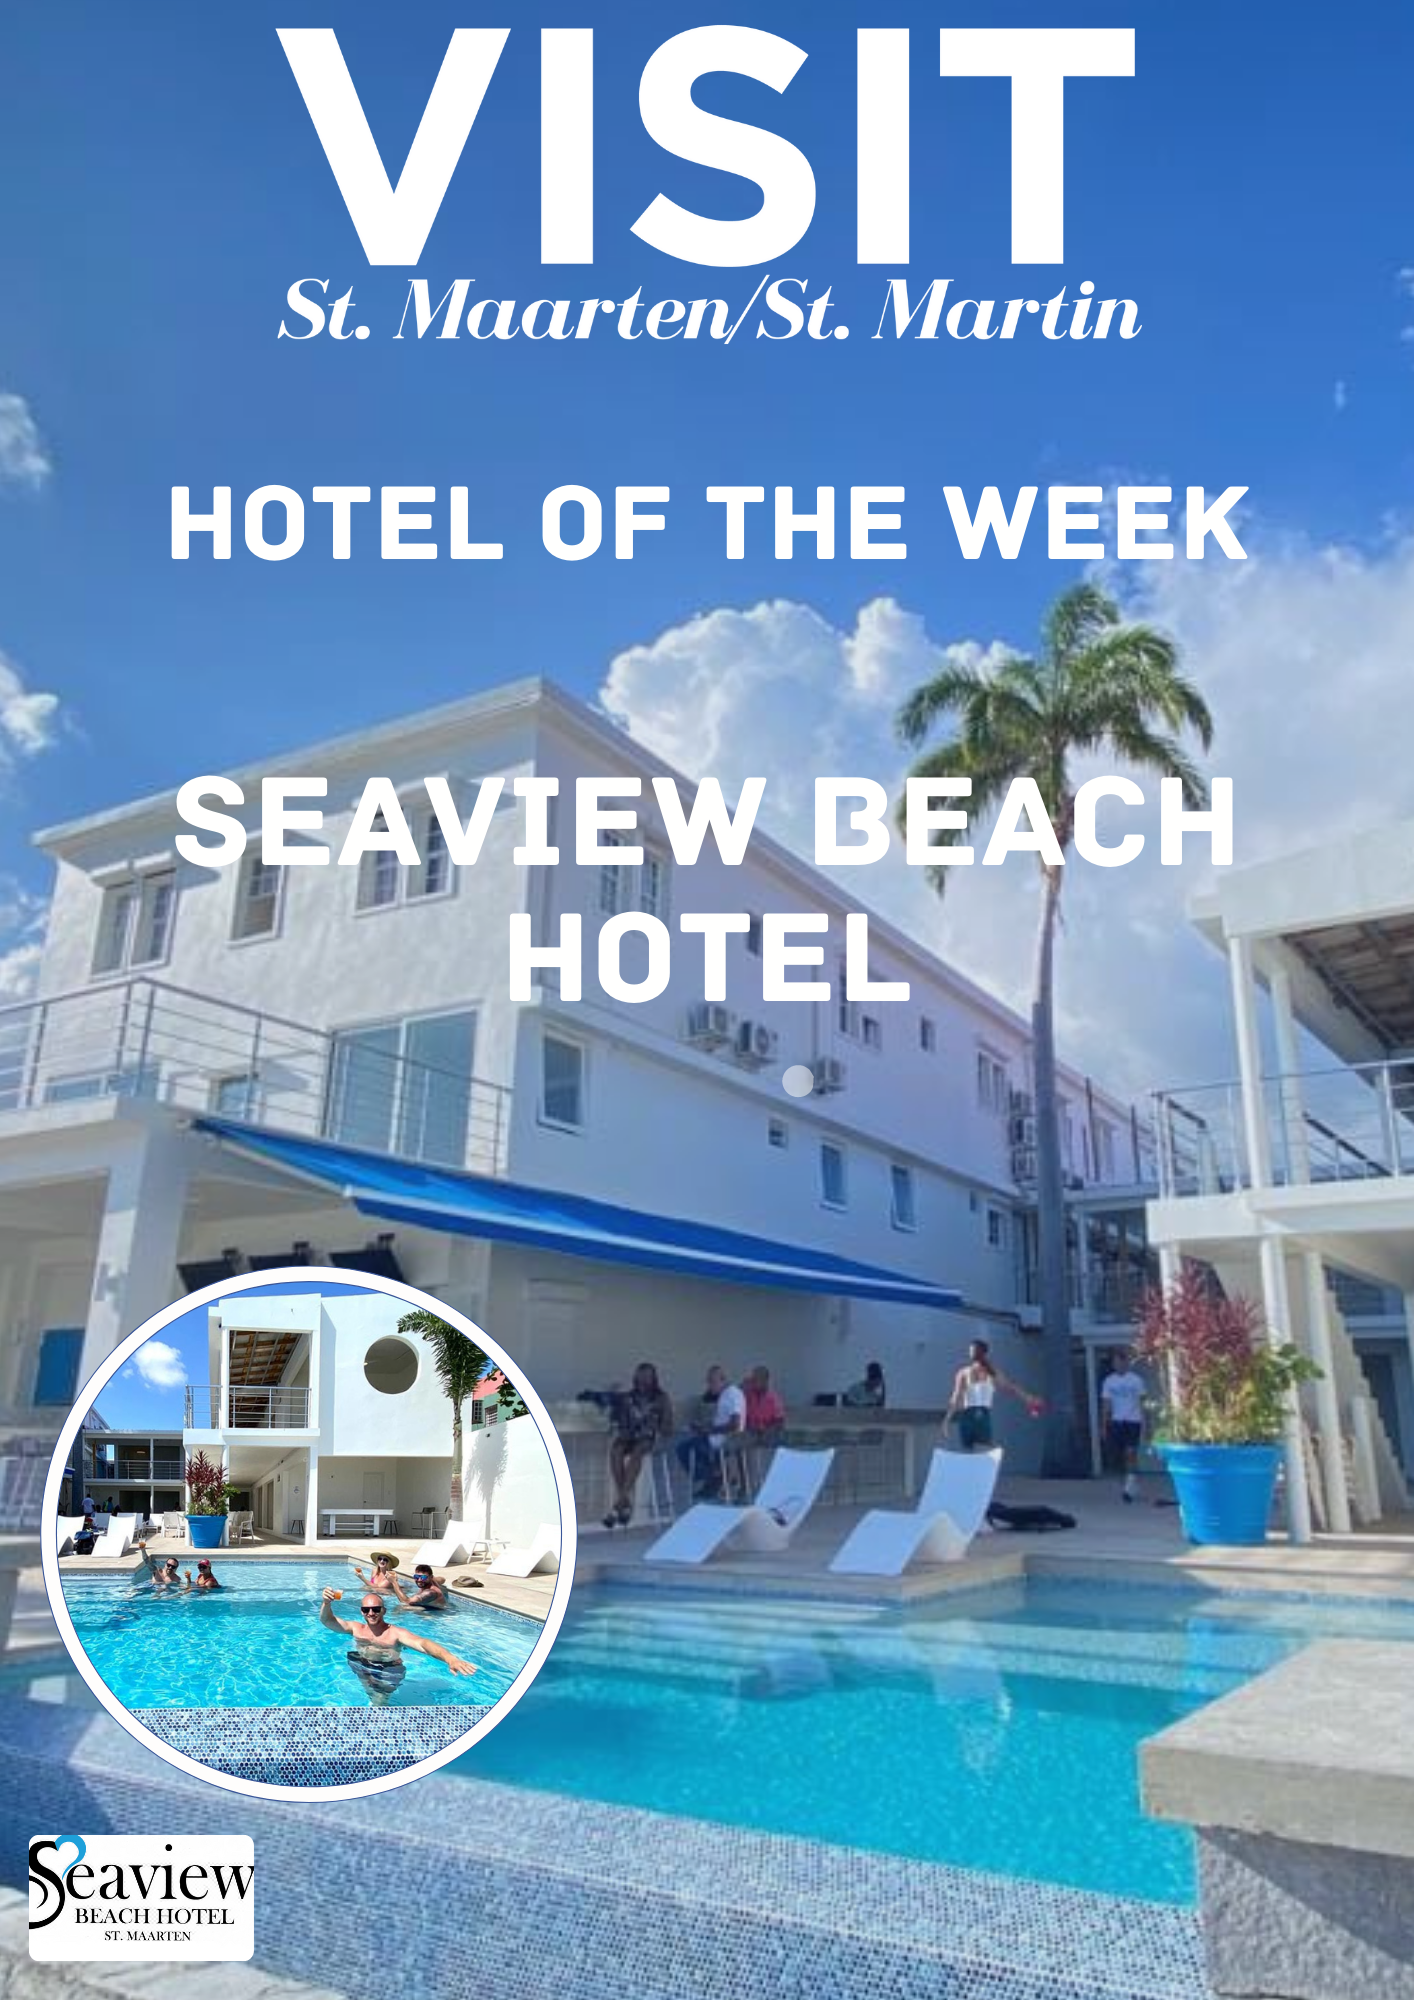 Seaview beach hotel new renovations st. maarten